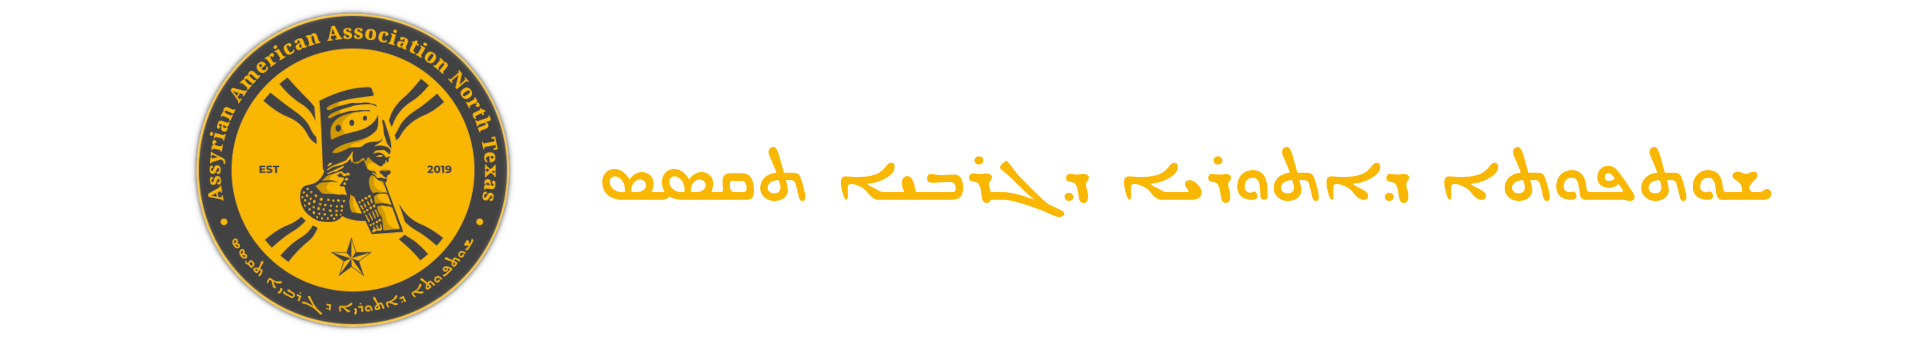 Assyrian American Association of North Texas logo